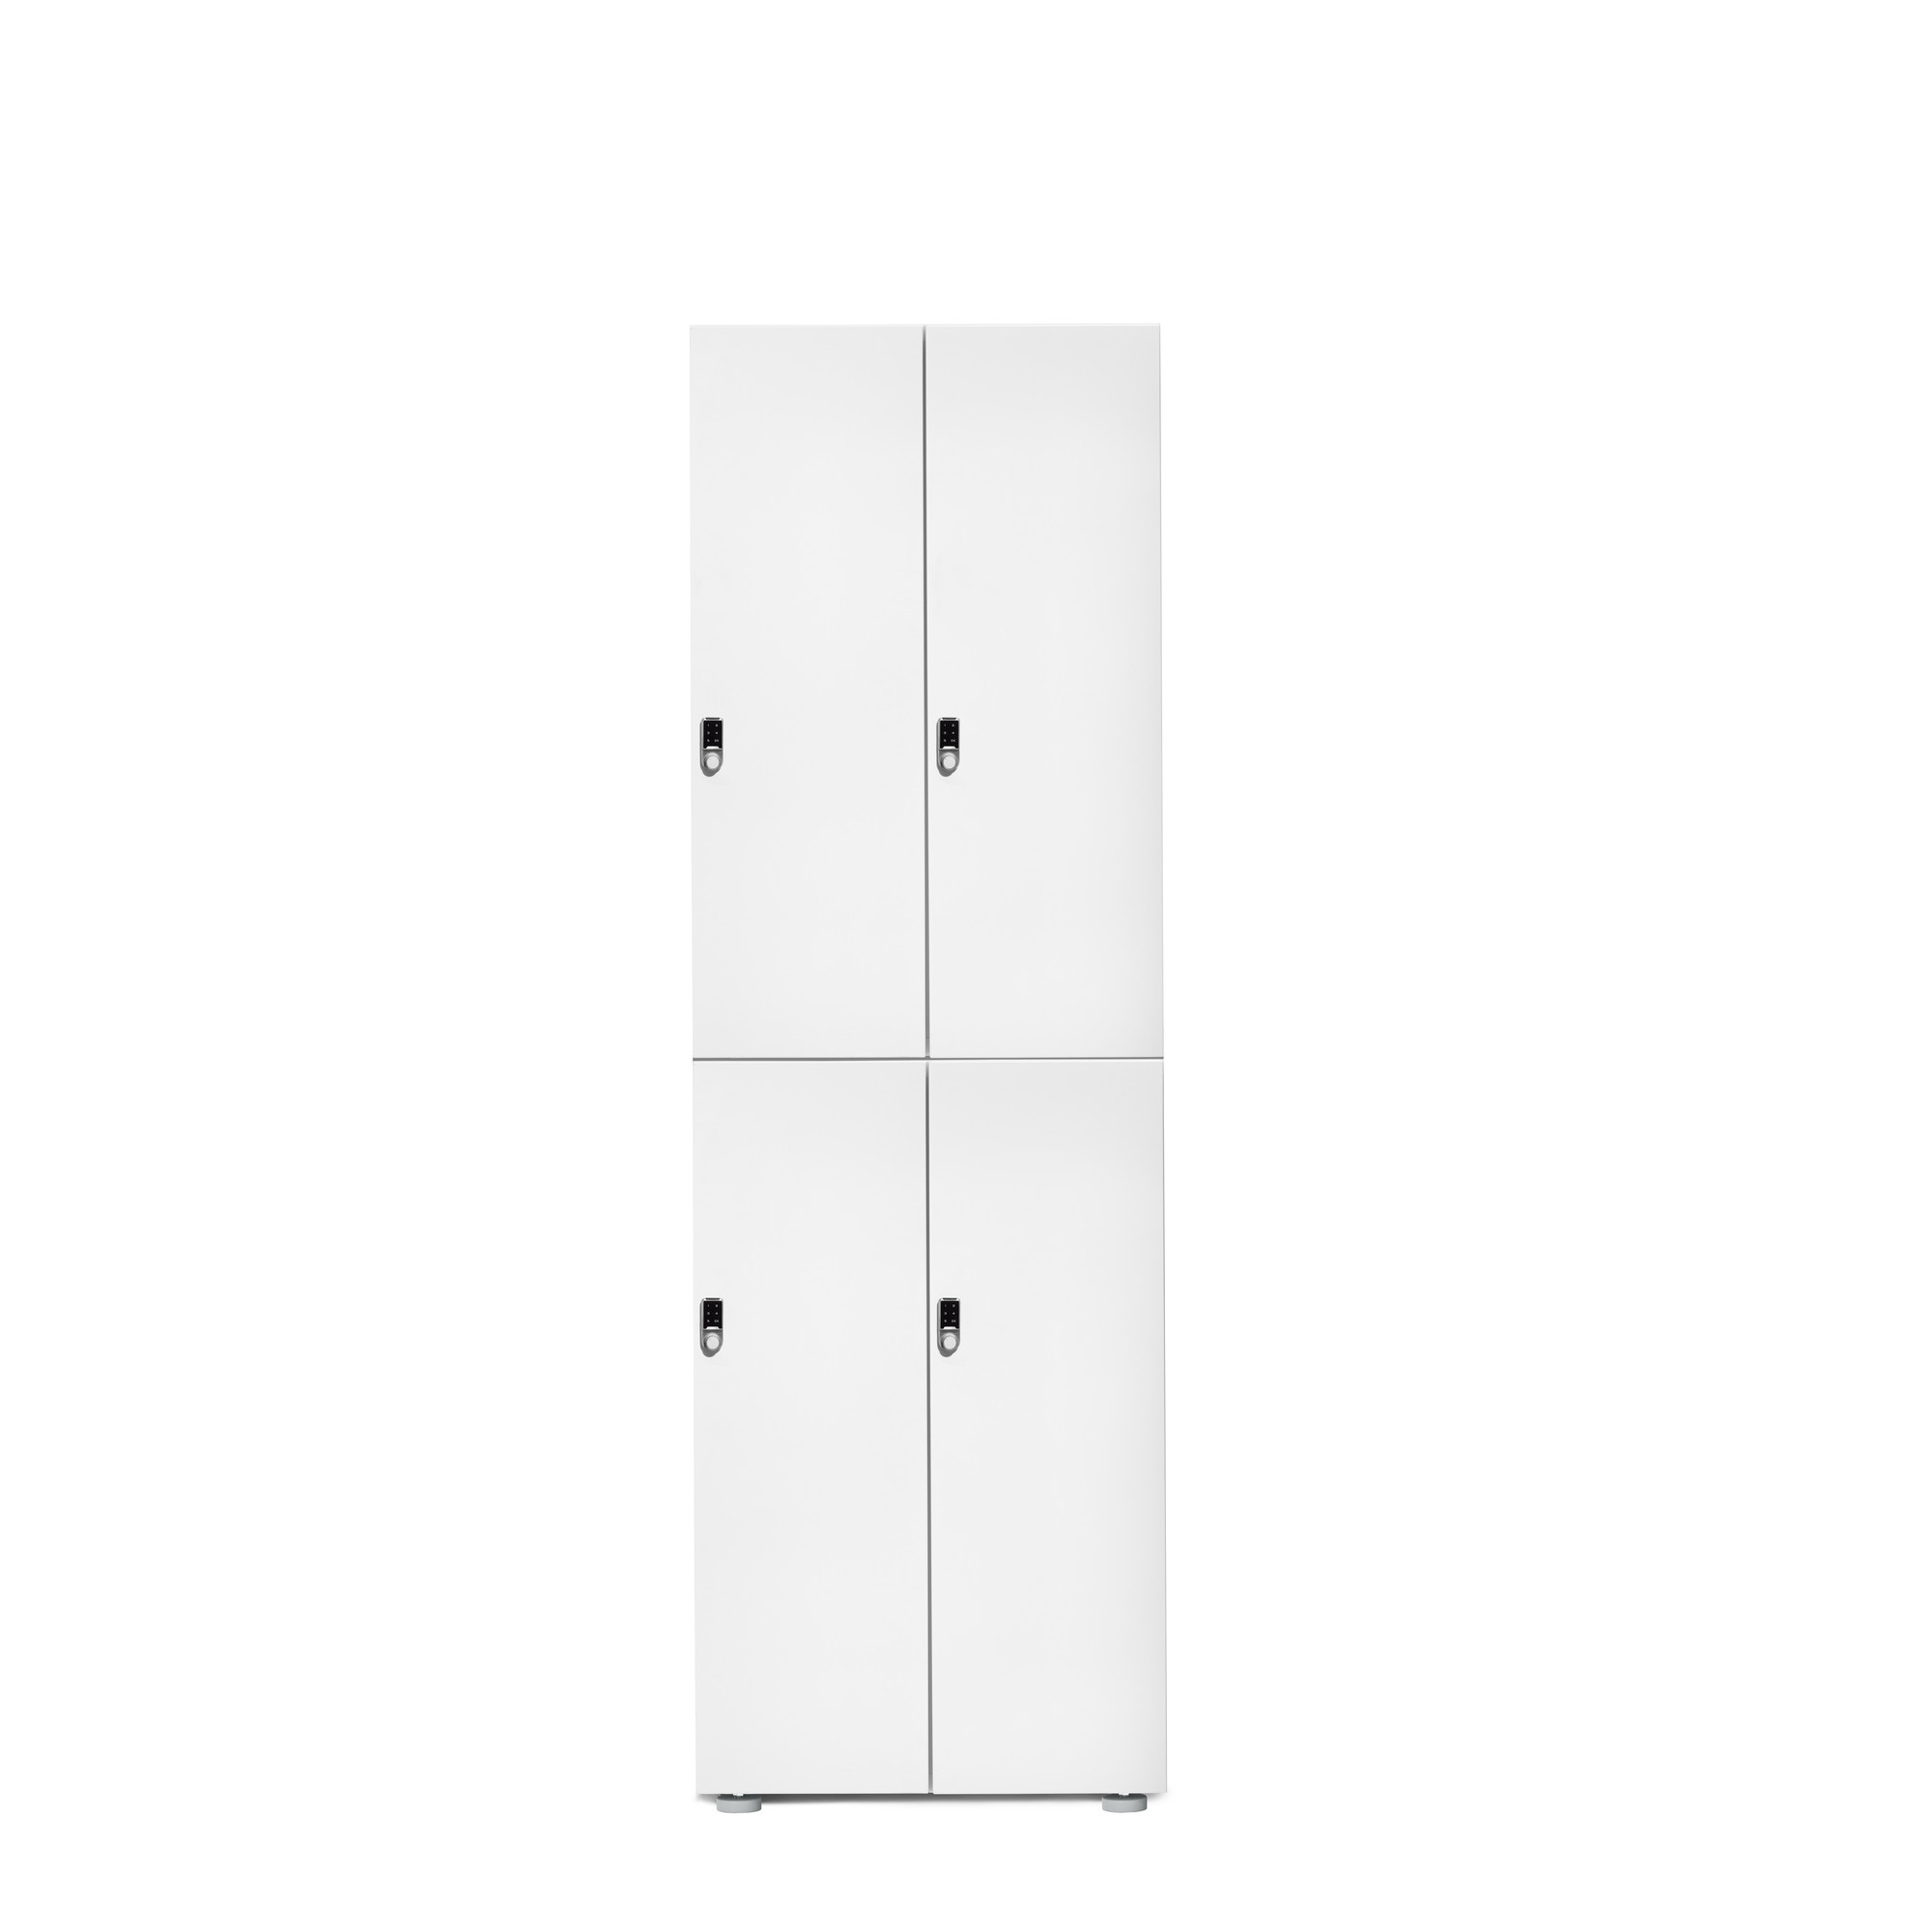 White Stash Digital 4-Door Coat Locker,White,hi-res